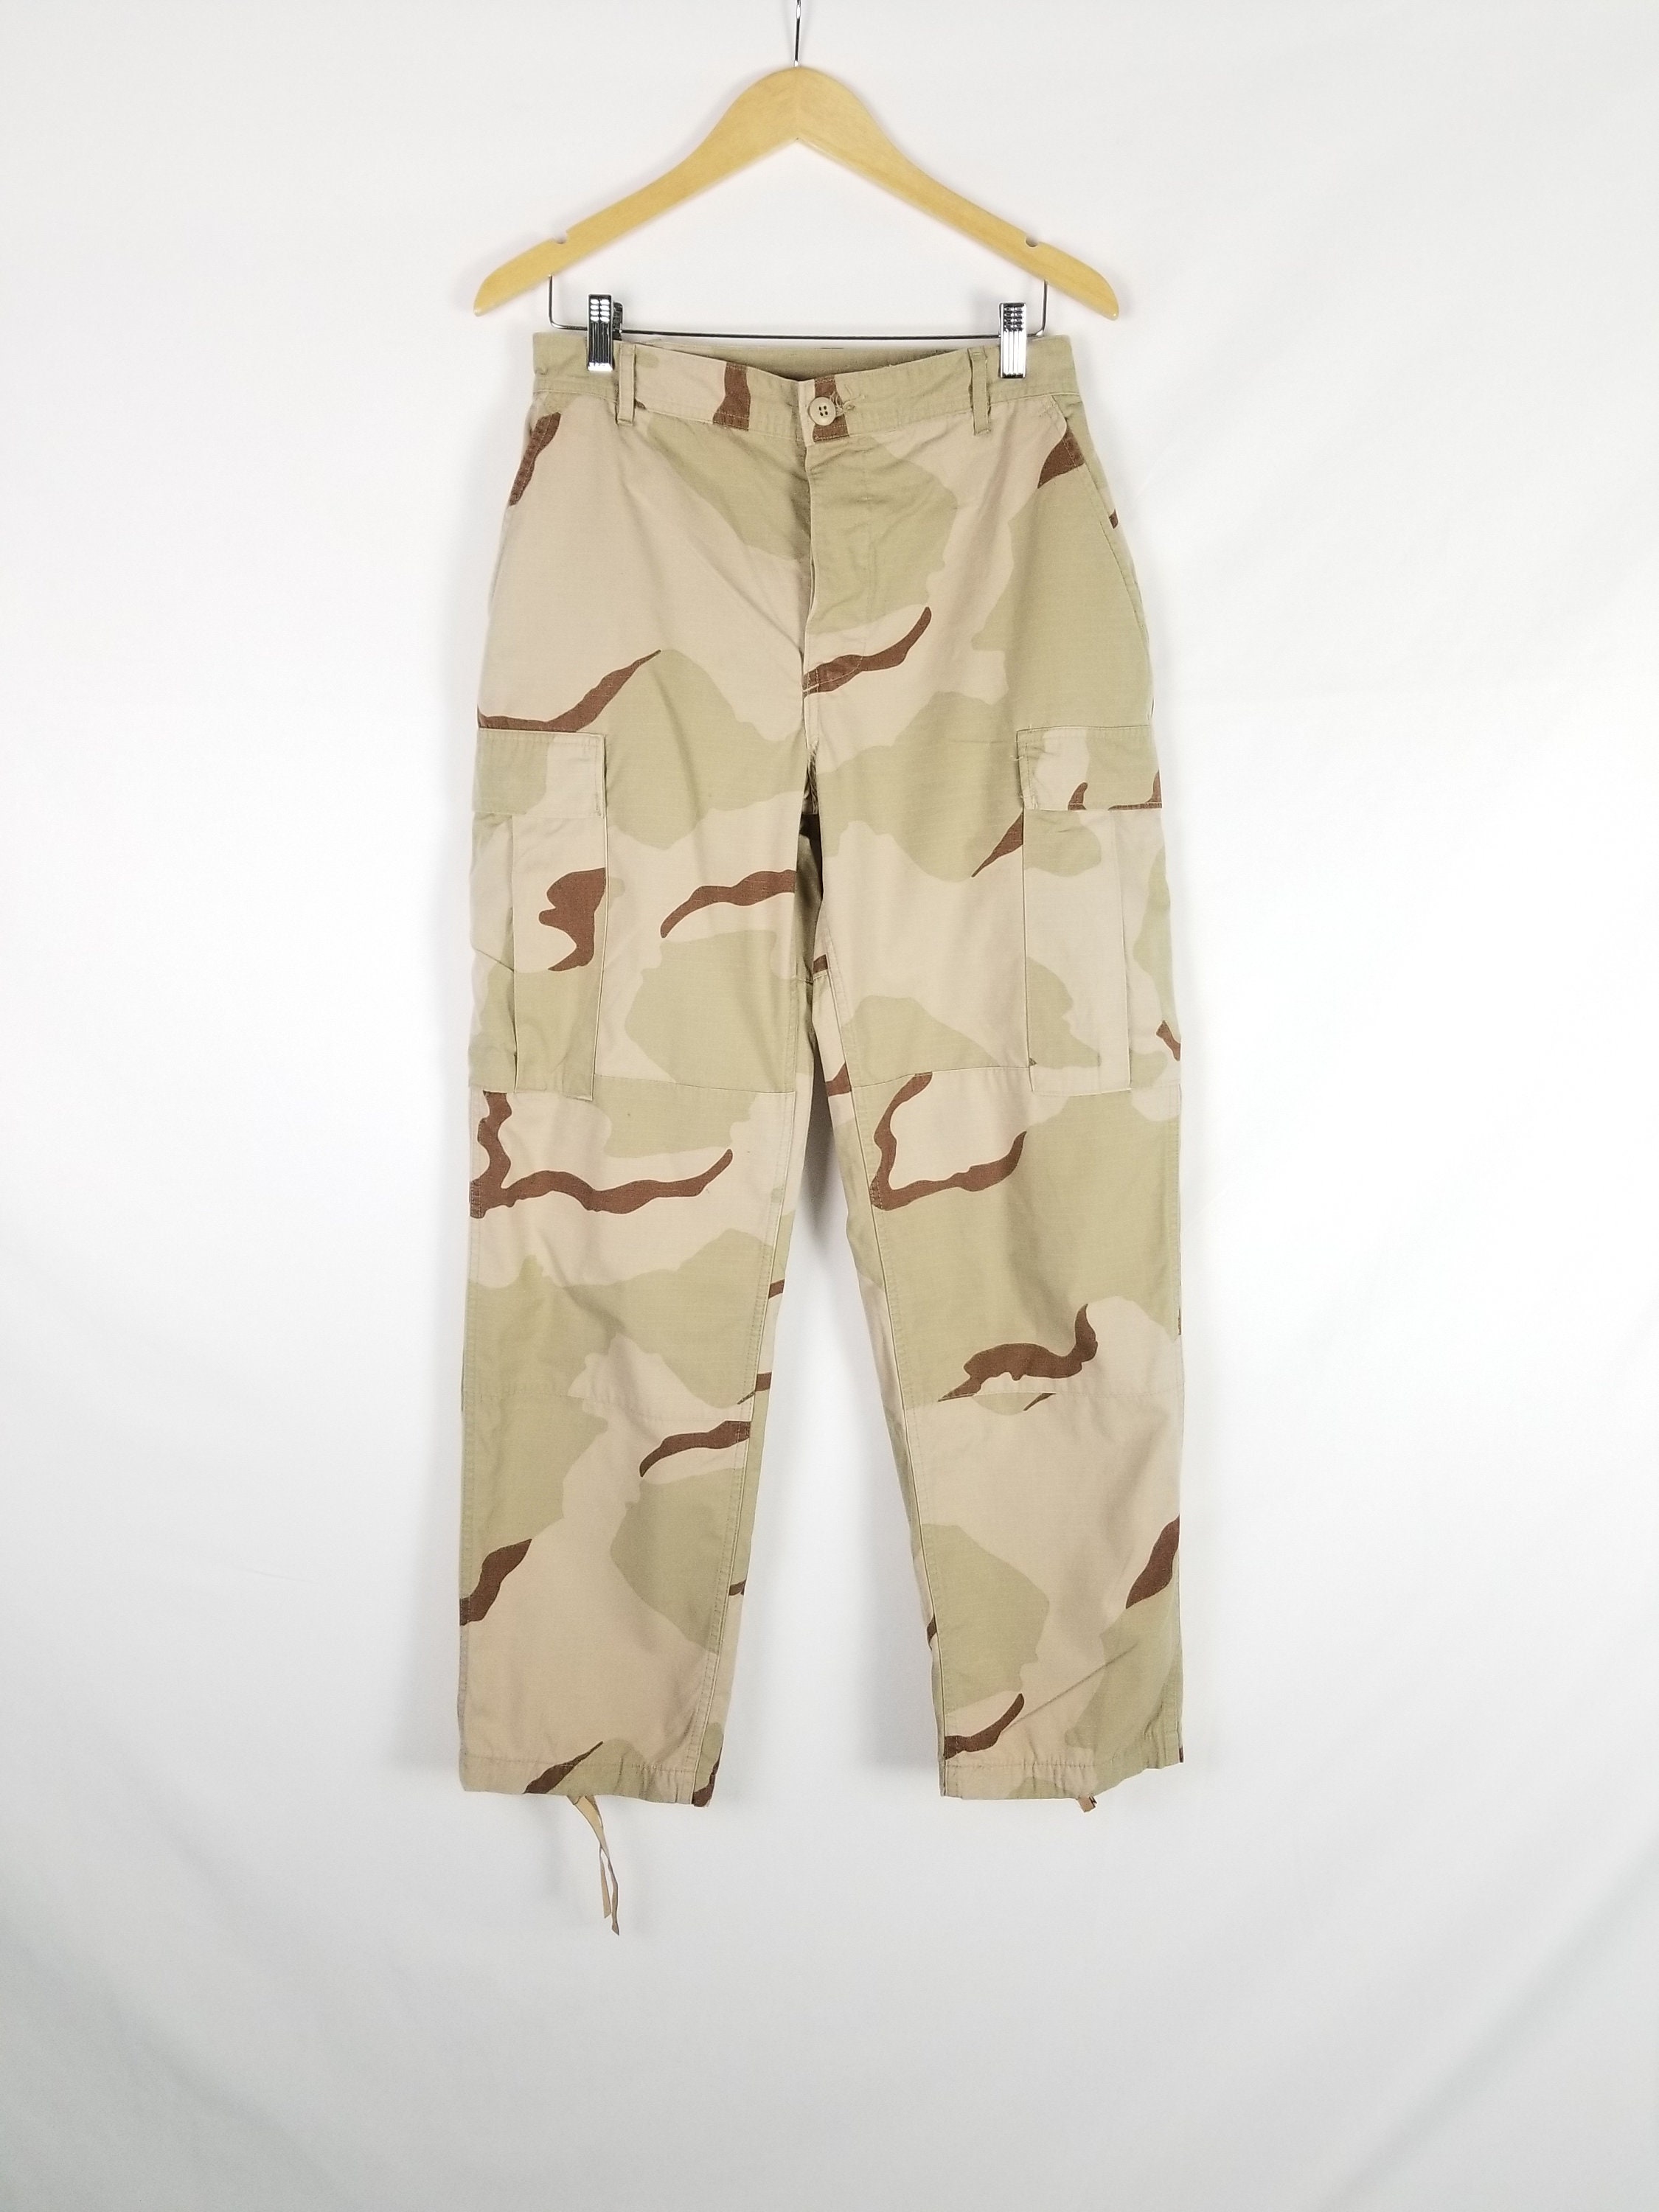 Military Issue, Pants, Vtg Us Military Issue Desert Camo Cargo Dcu Pants  Trousers Medium Reg Am3t5